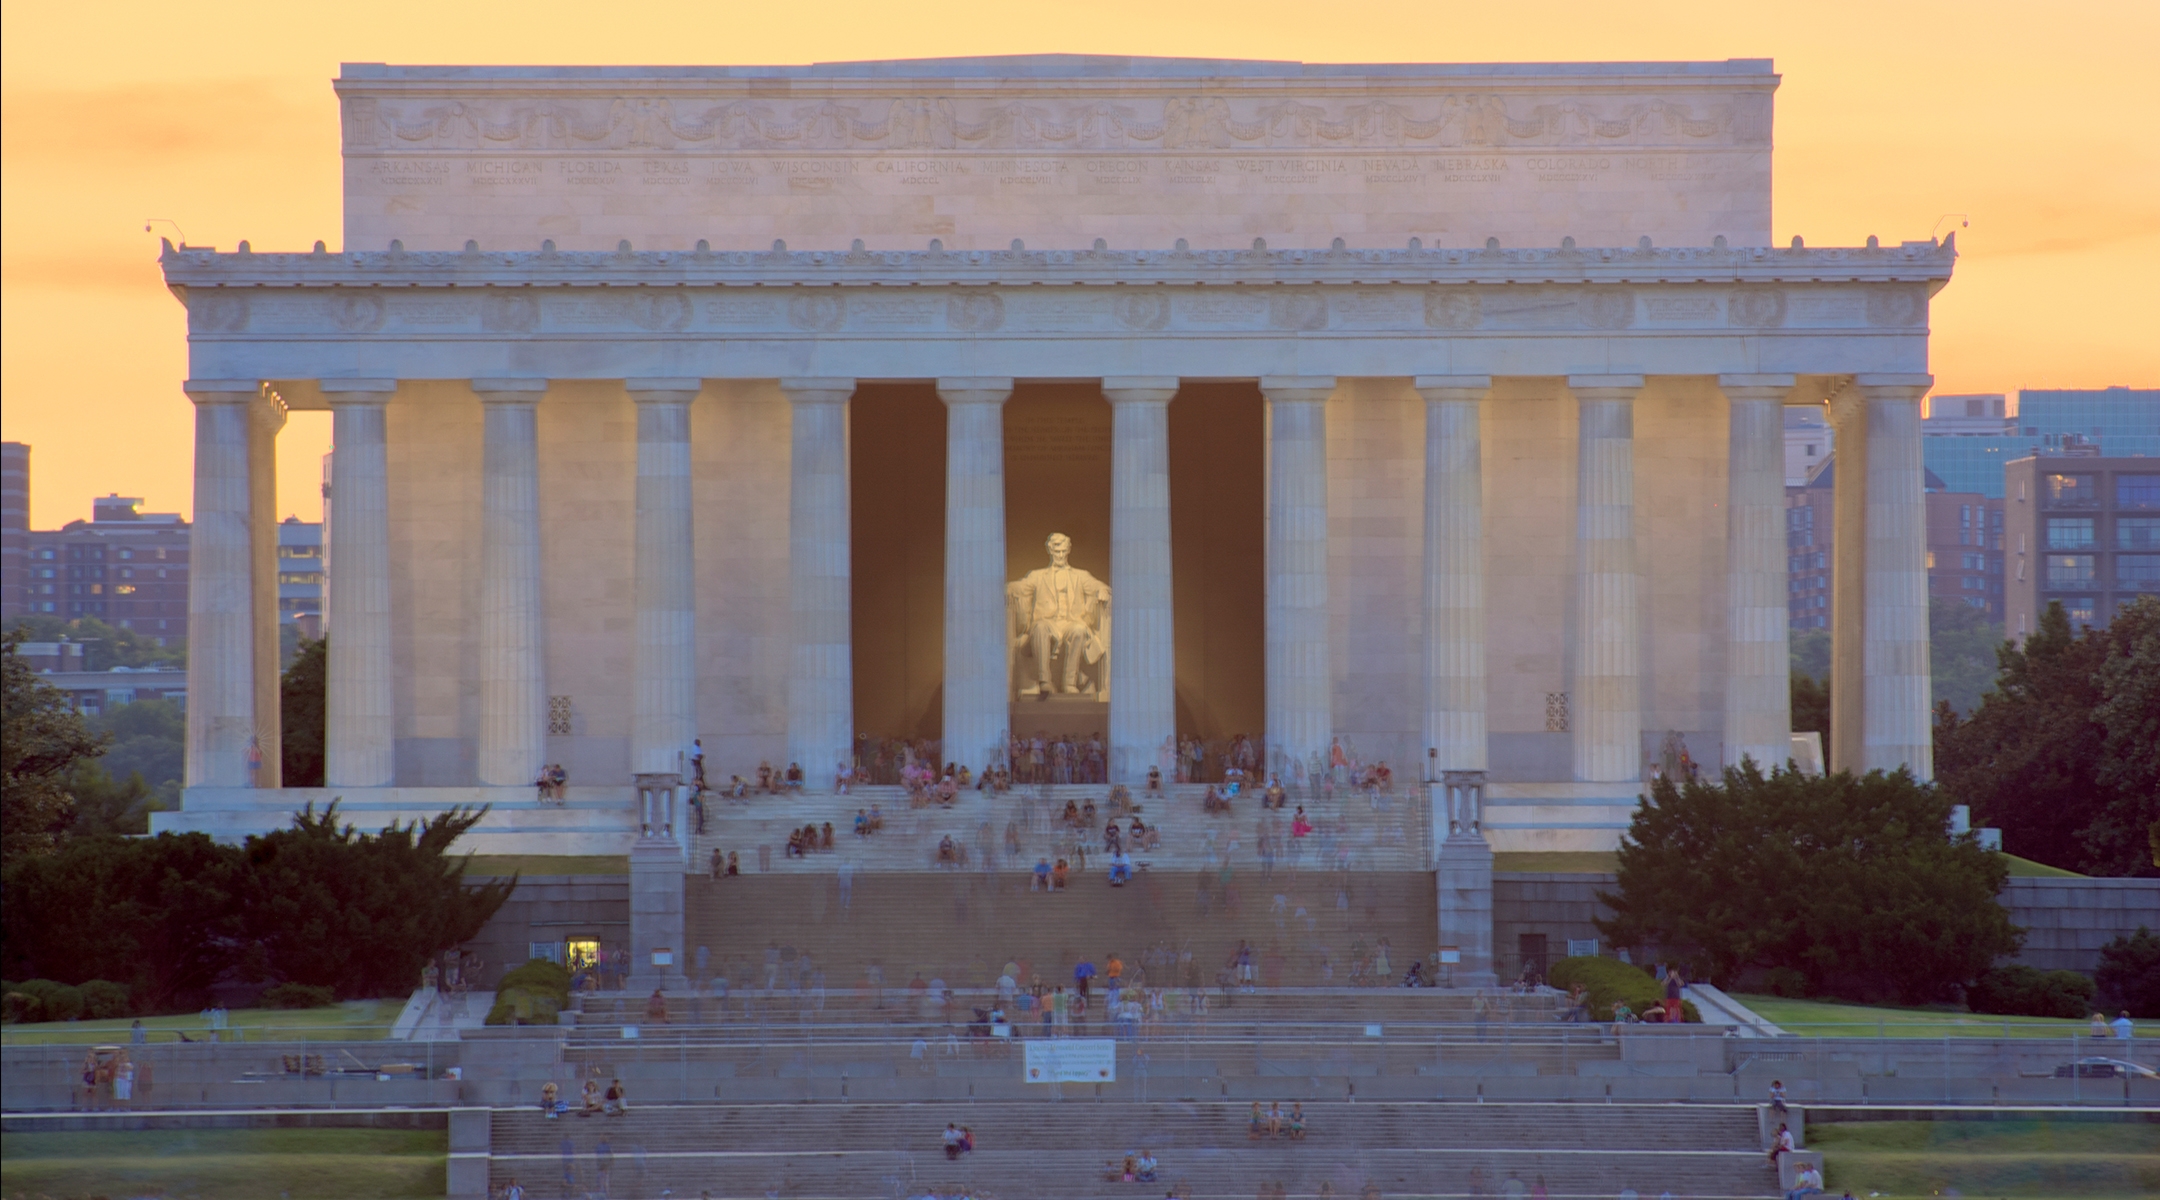 The Lincoln Memorial in Washington, D.C. (Trevor Carpenter)